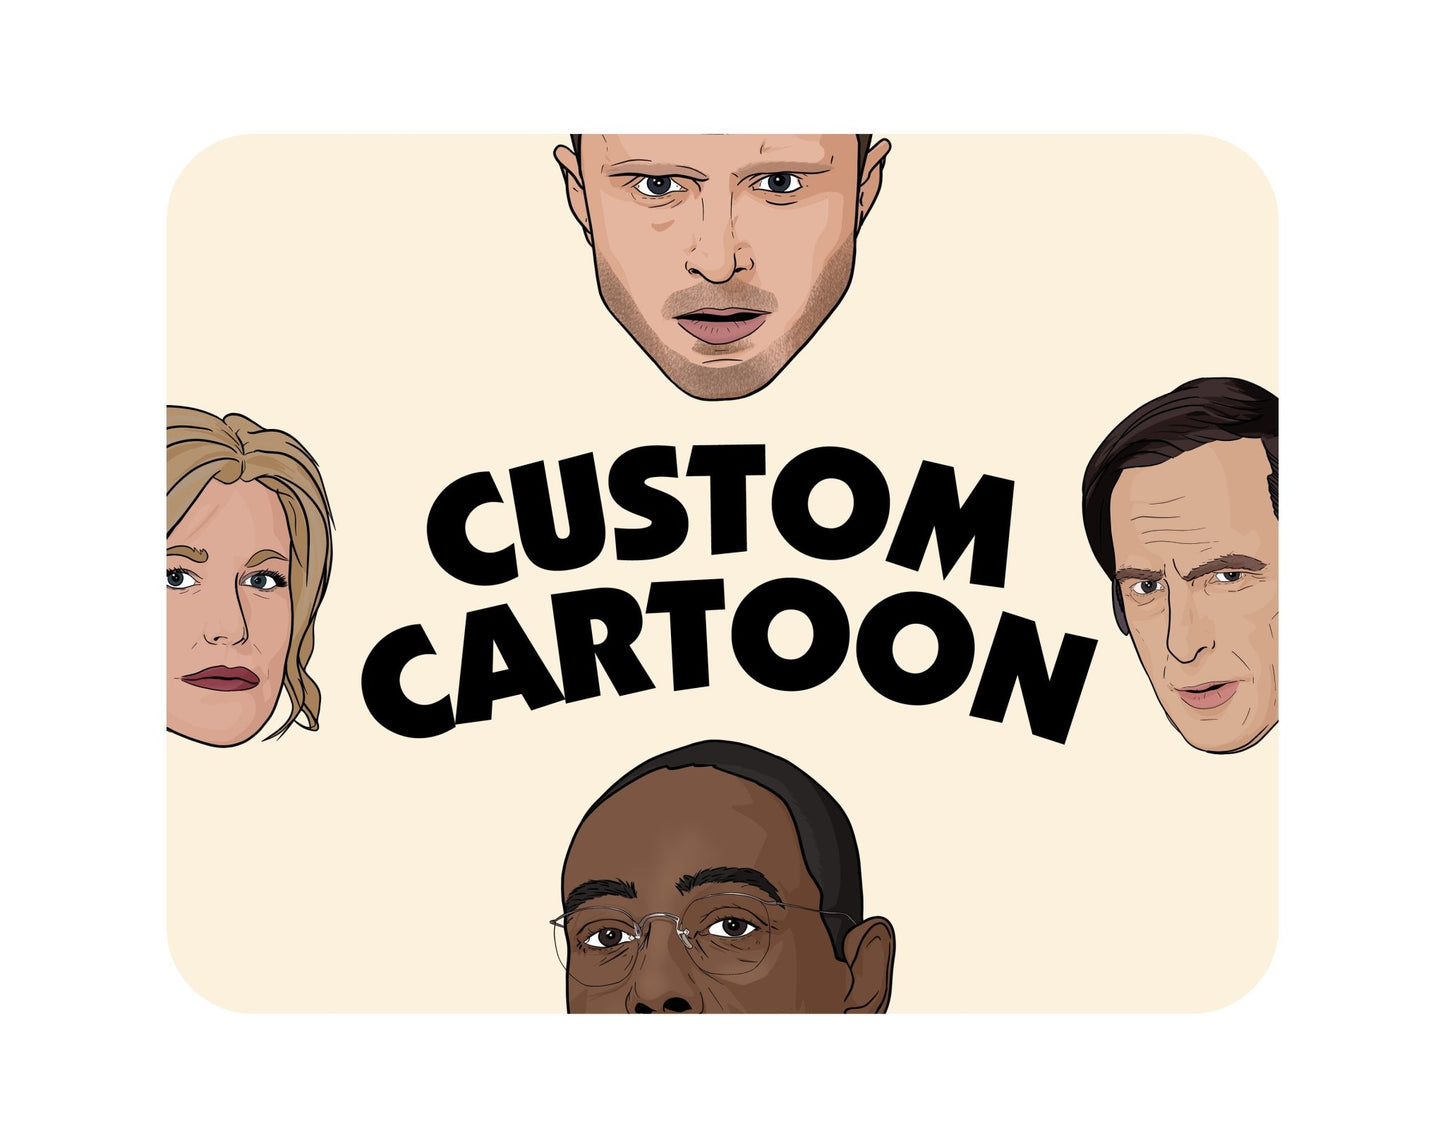 Custom Cartoon Character for Monopoly Board